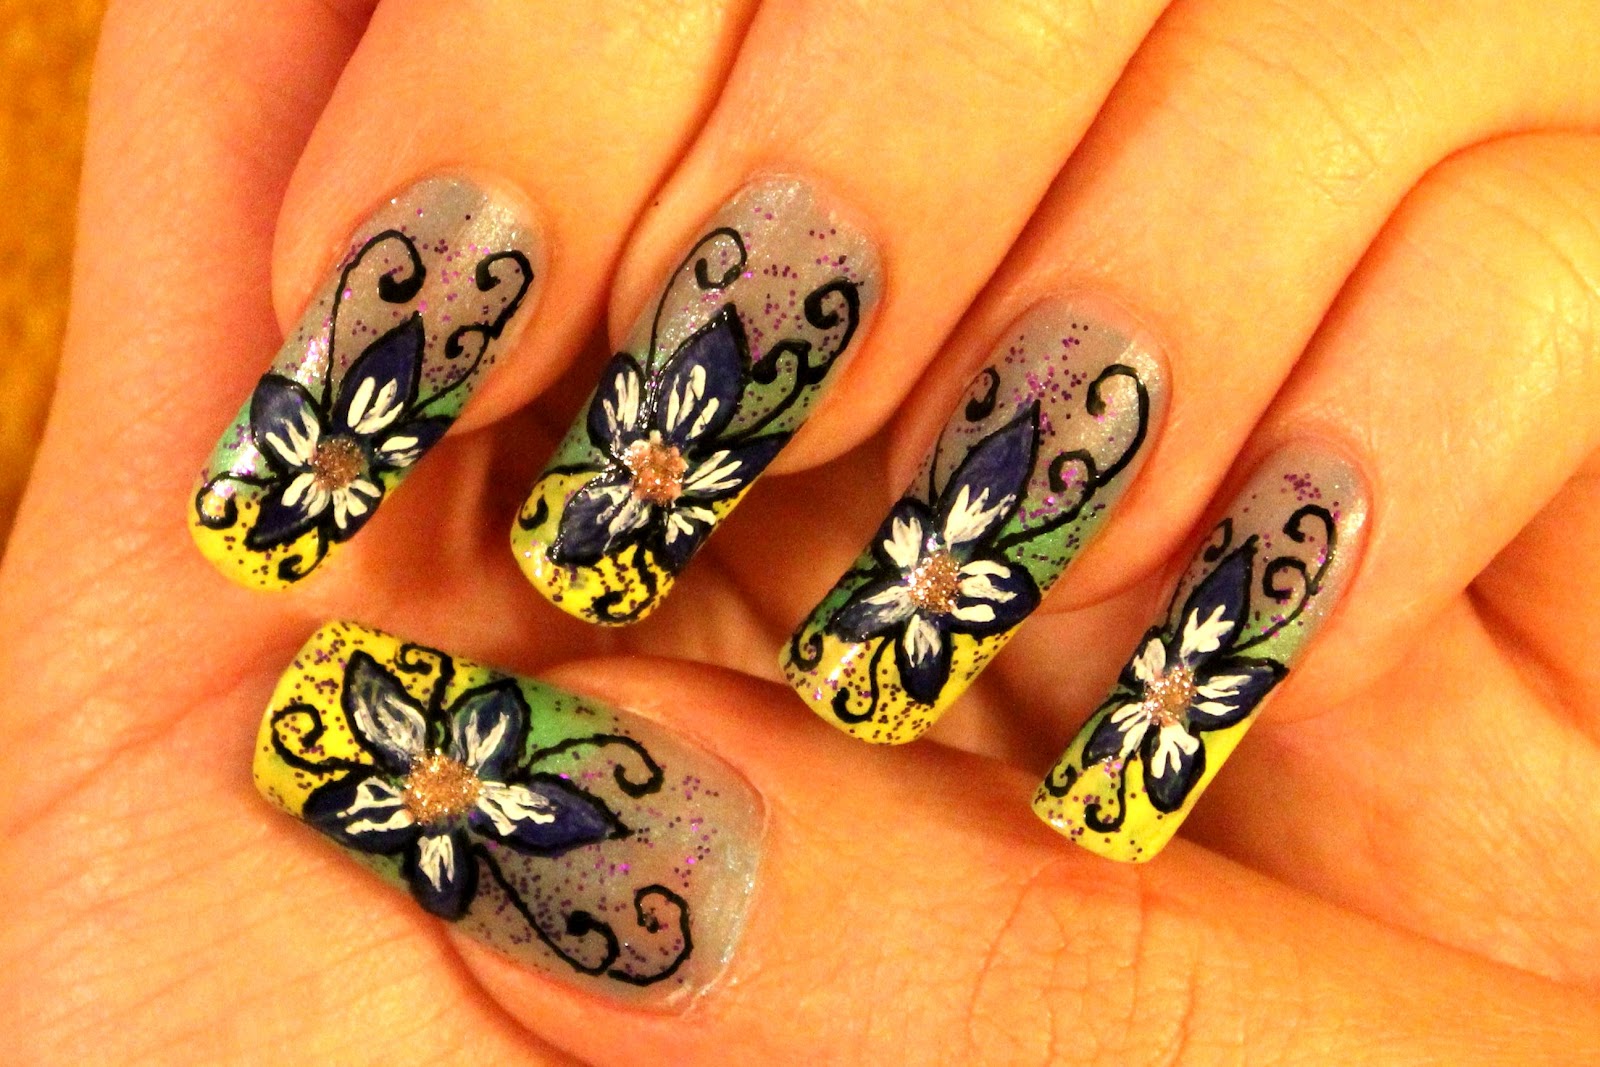 Flower Nail Art Designs Step by Step Tutorials - wide 9